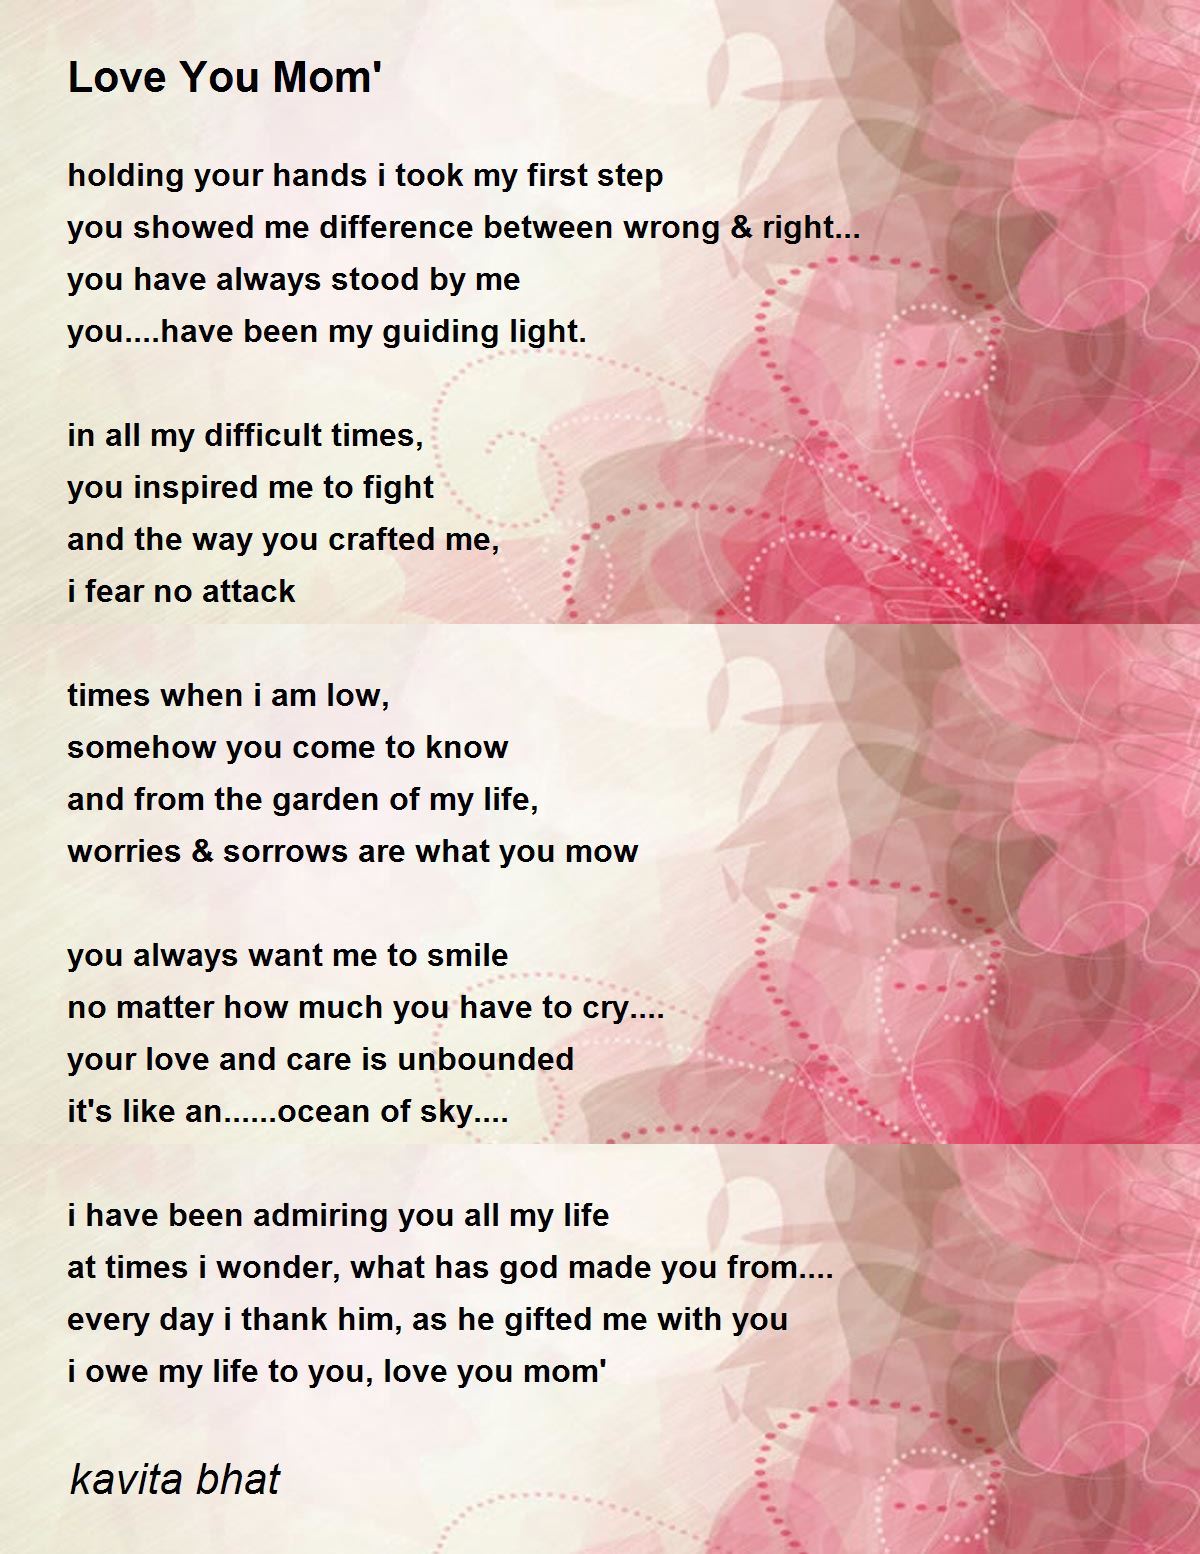 Love You Mom' by kavita bhat - Love You Mom' Poem